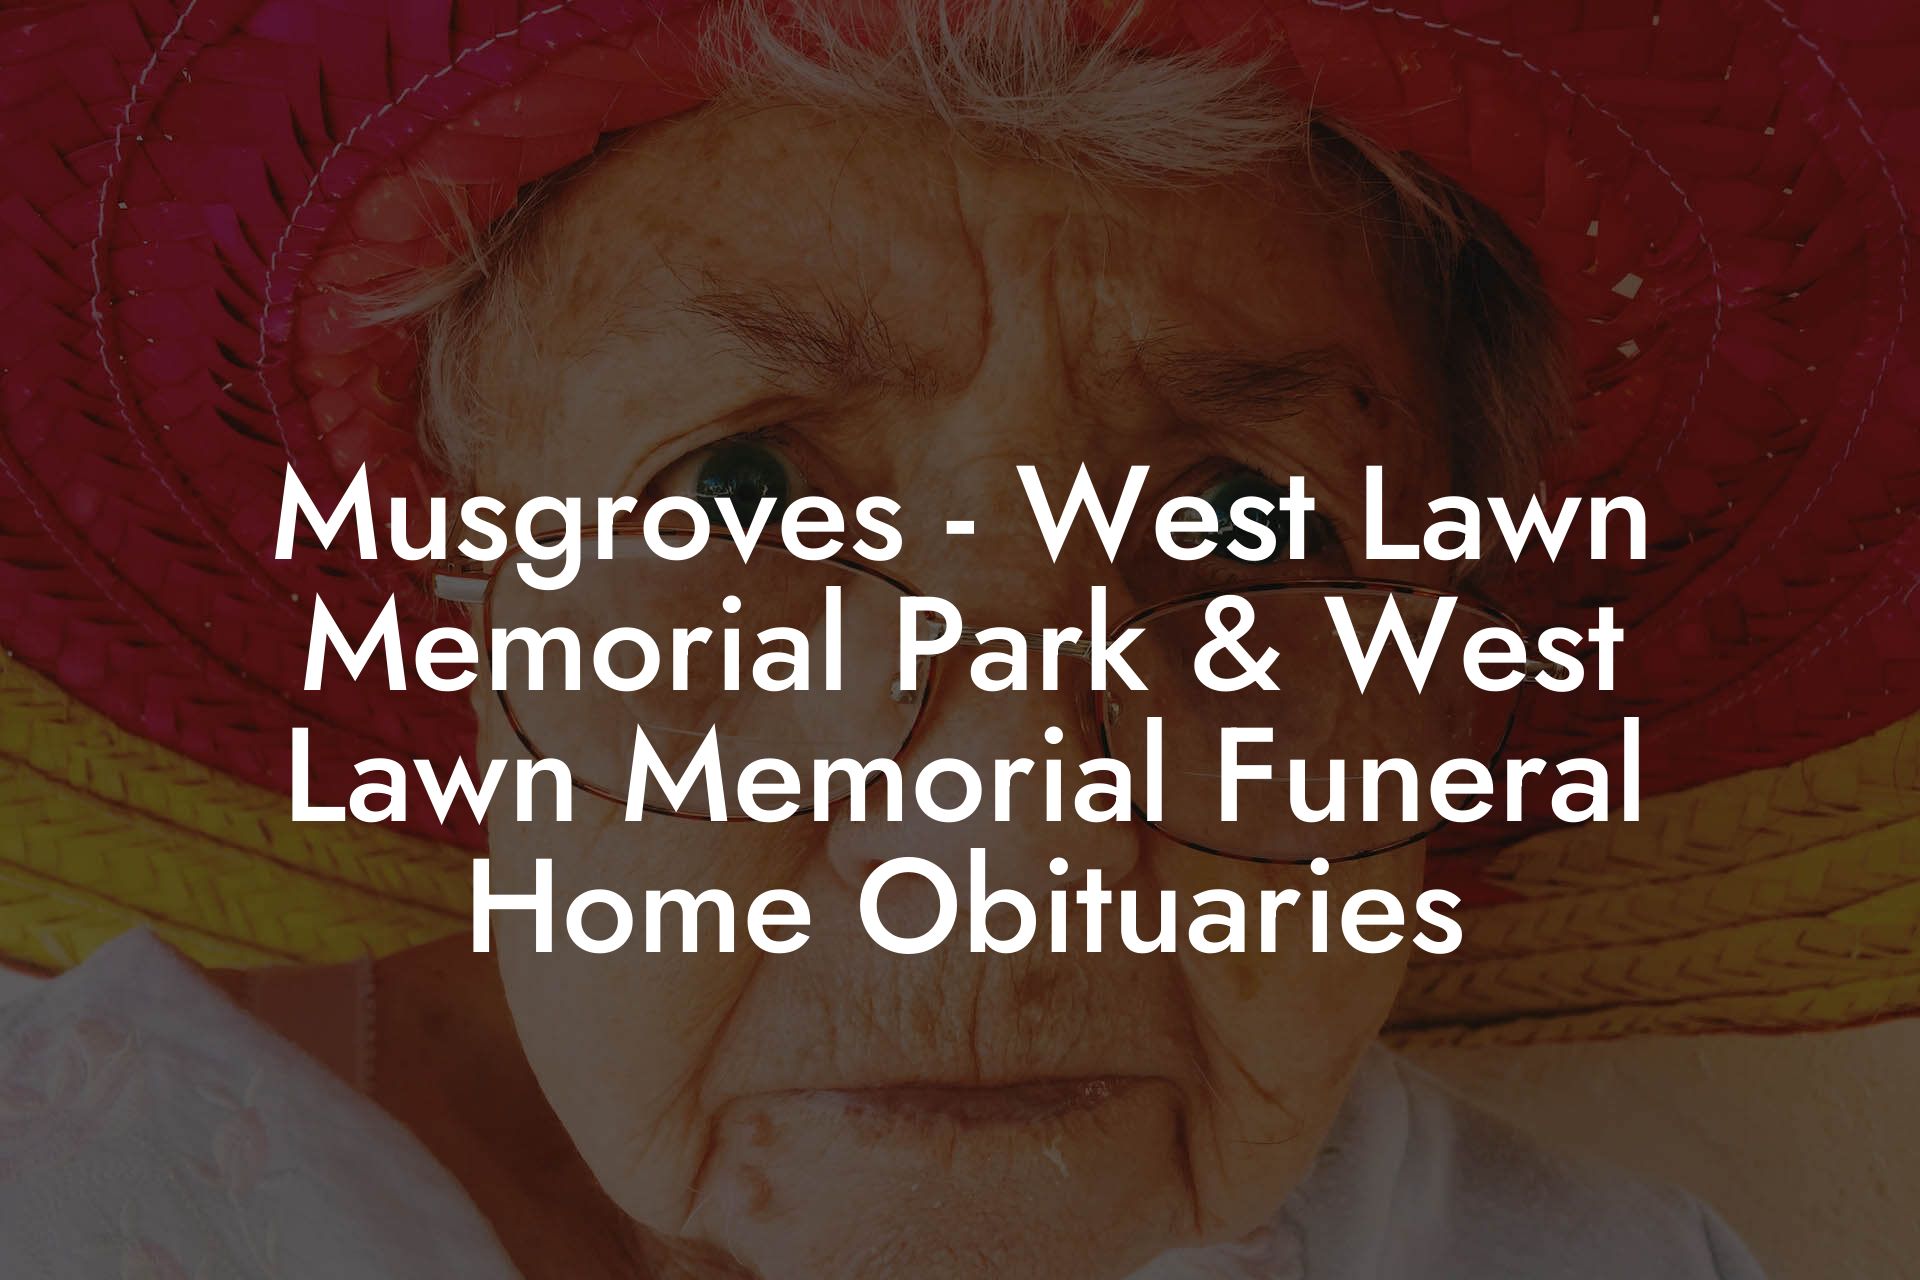 Musgroves - West Lawn Memorial Park & West Lawn Memorial Funeral Home Obituaries